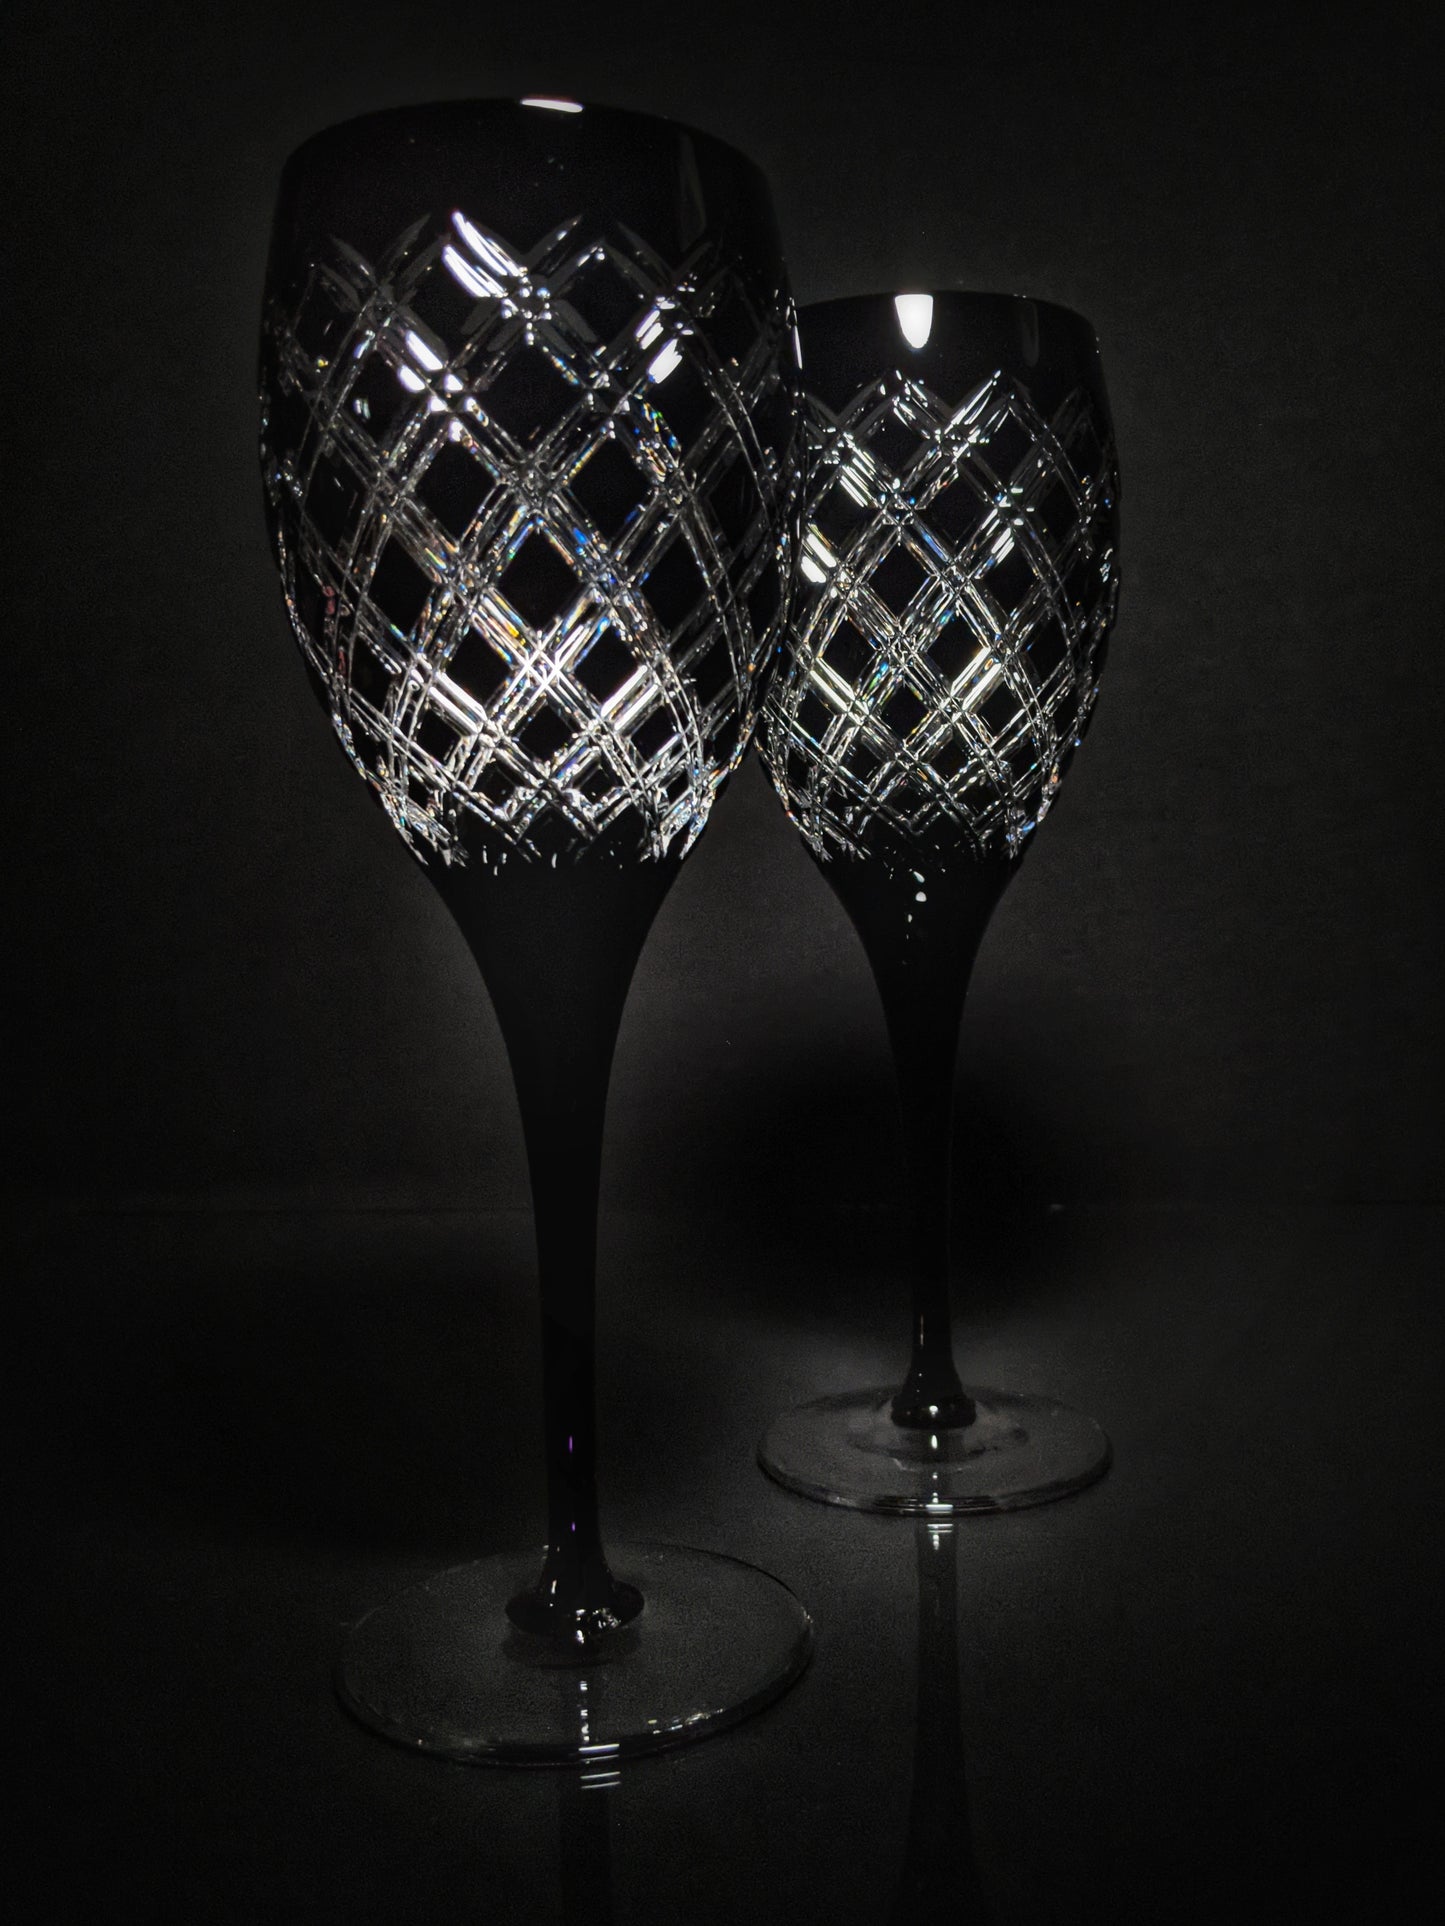 AJKA Athenee Black Onyx Crystal Goblets